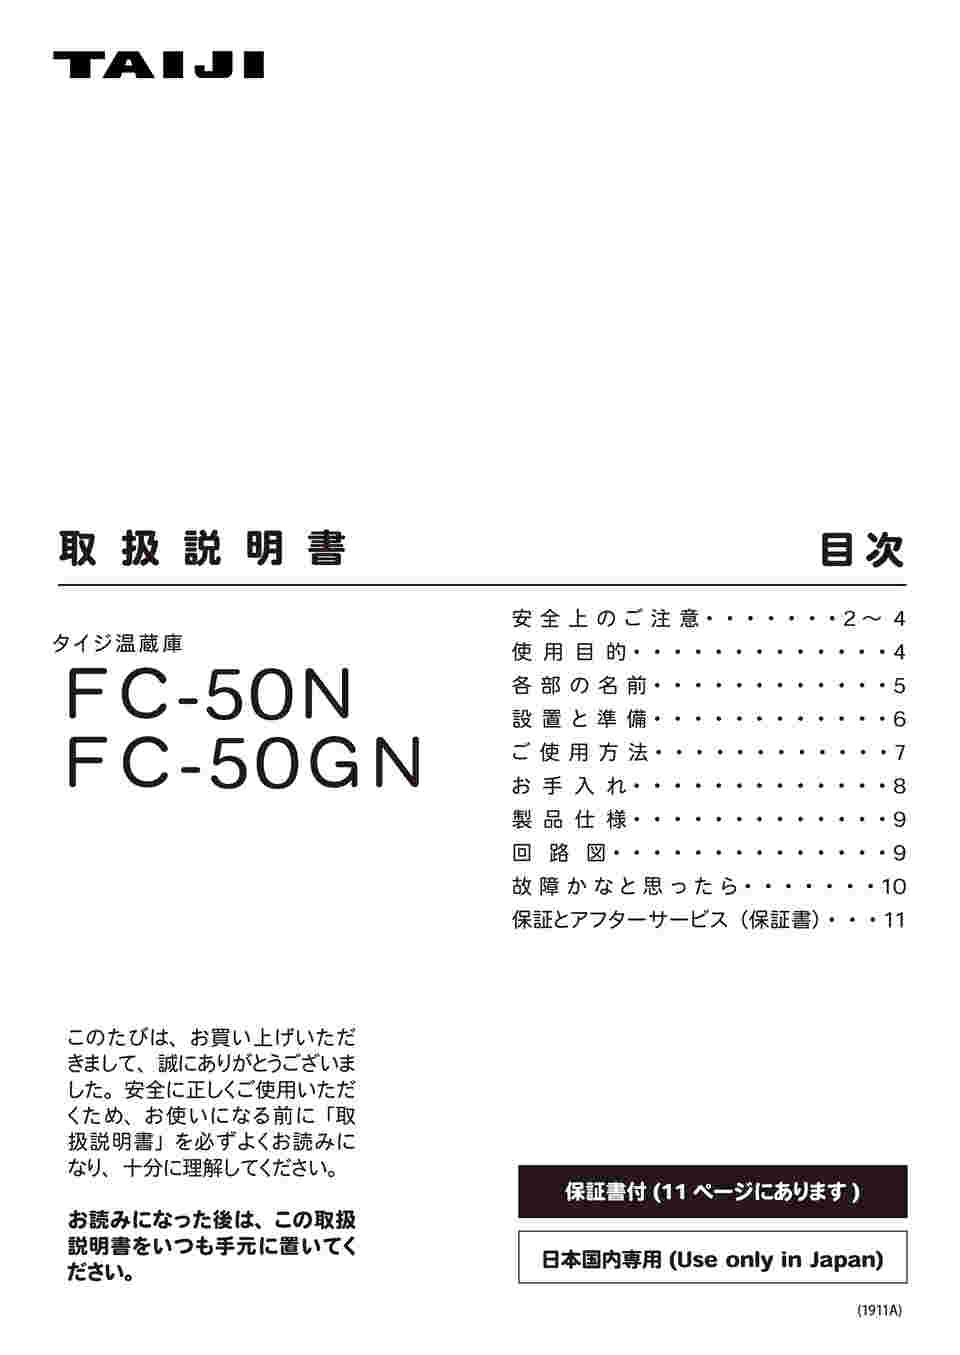 NEW タイジ 温蔵庫 FC-50N フードキャビ